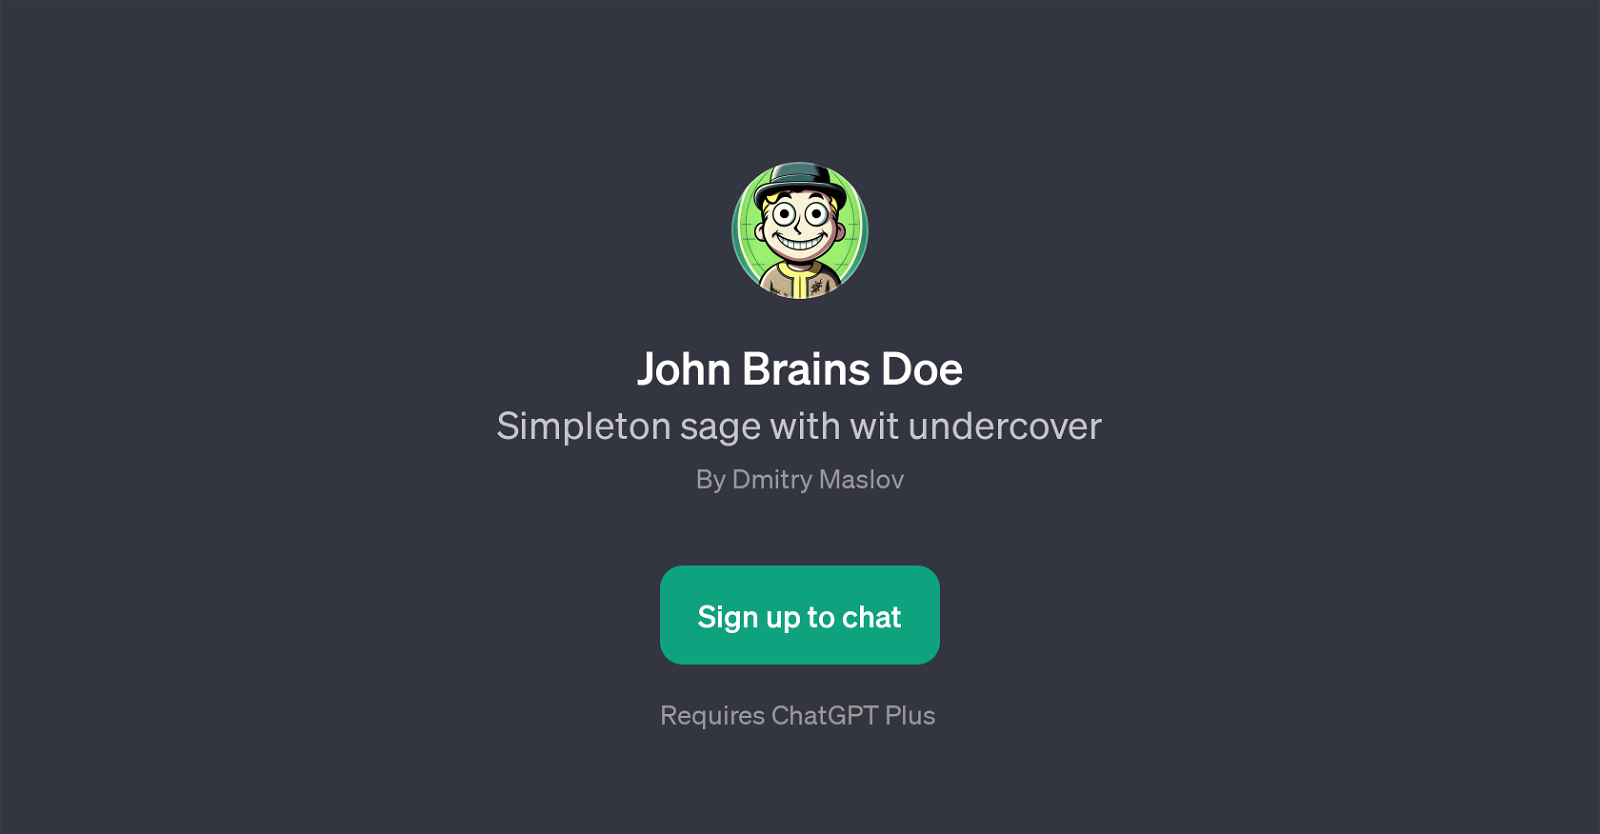 John Brains Doe website